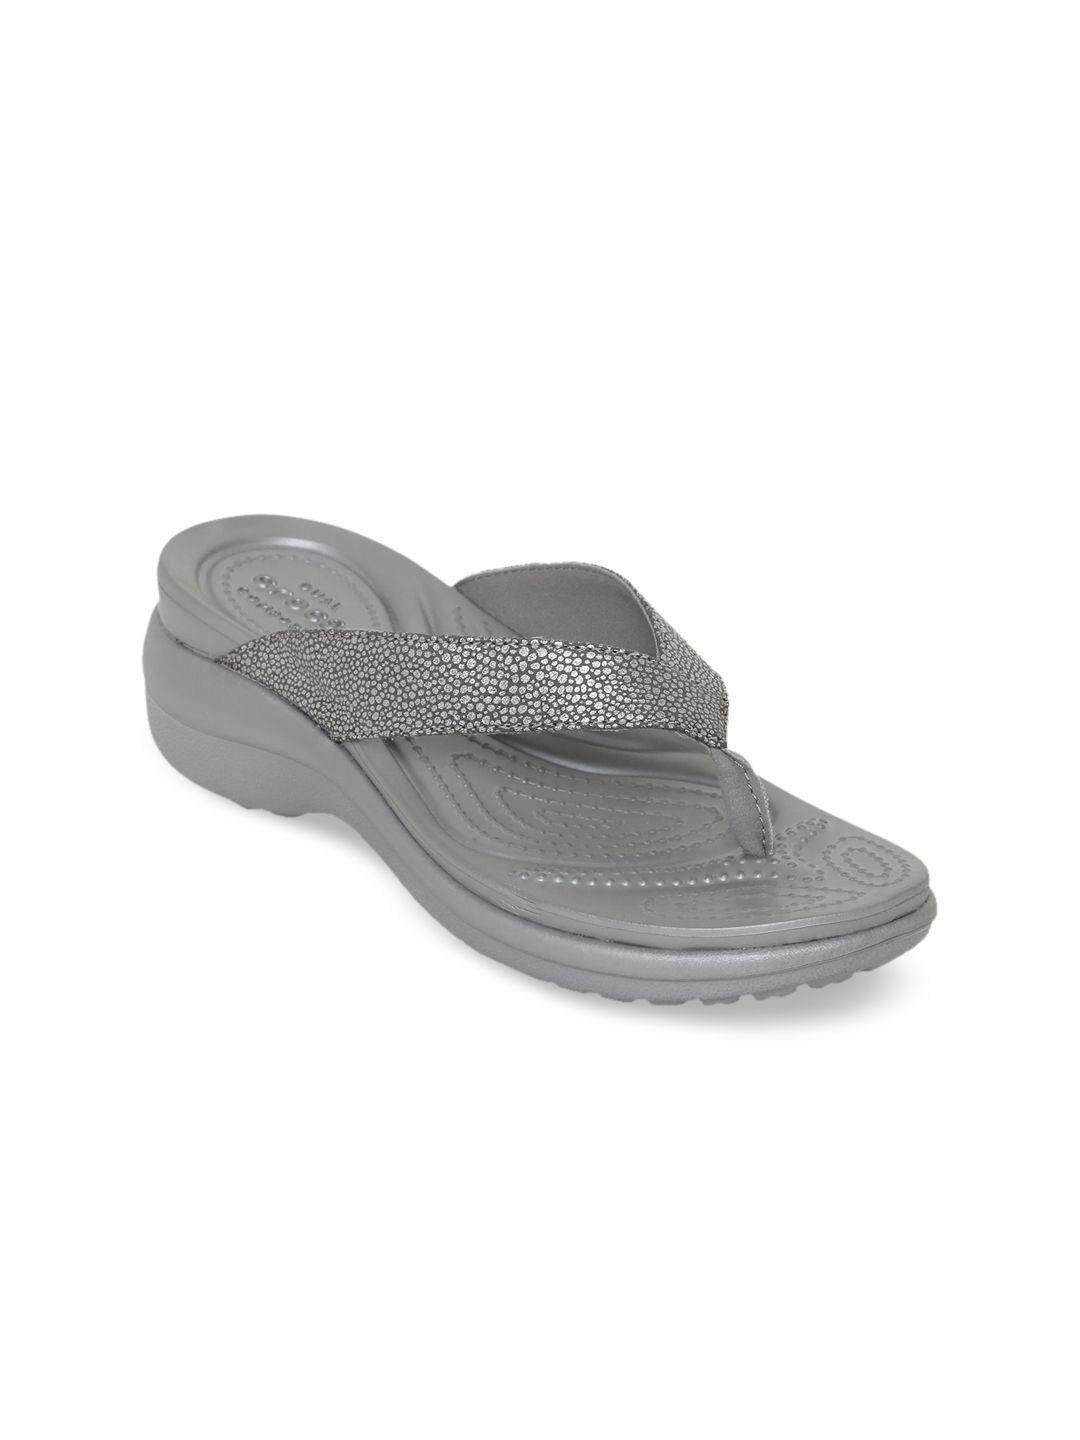 crocs-capri--women-grey-woven-design-sandals